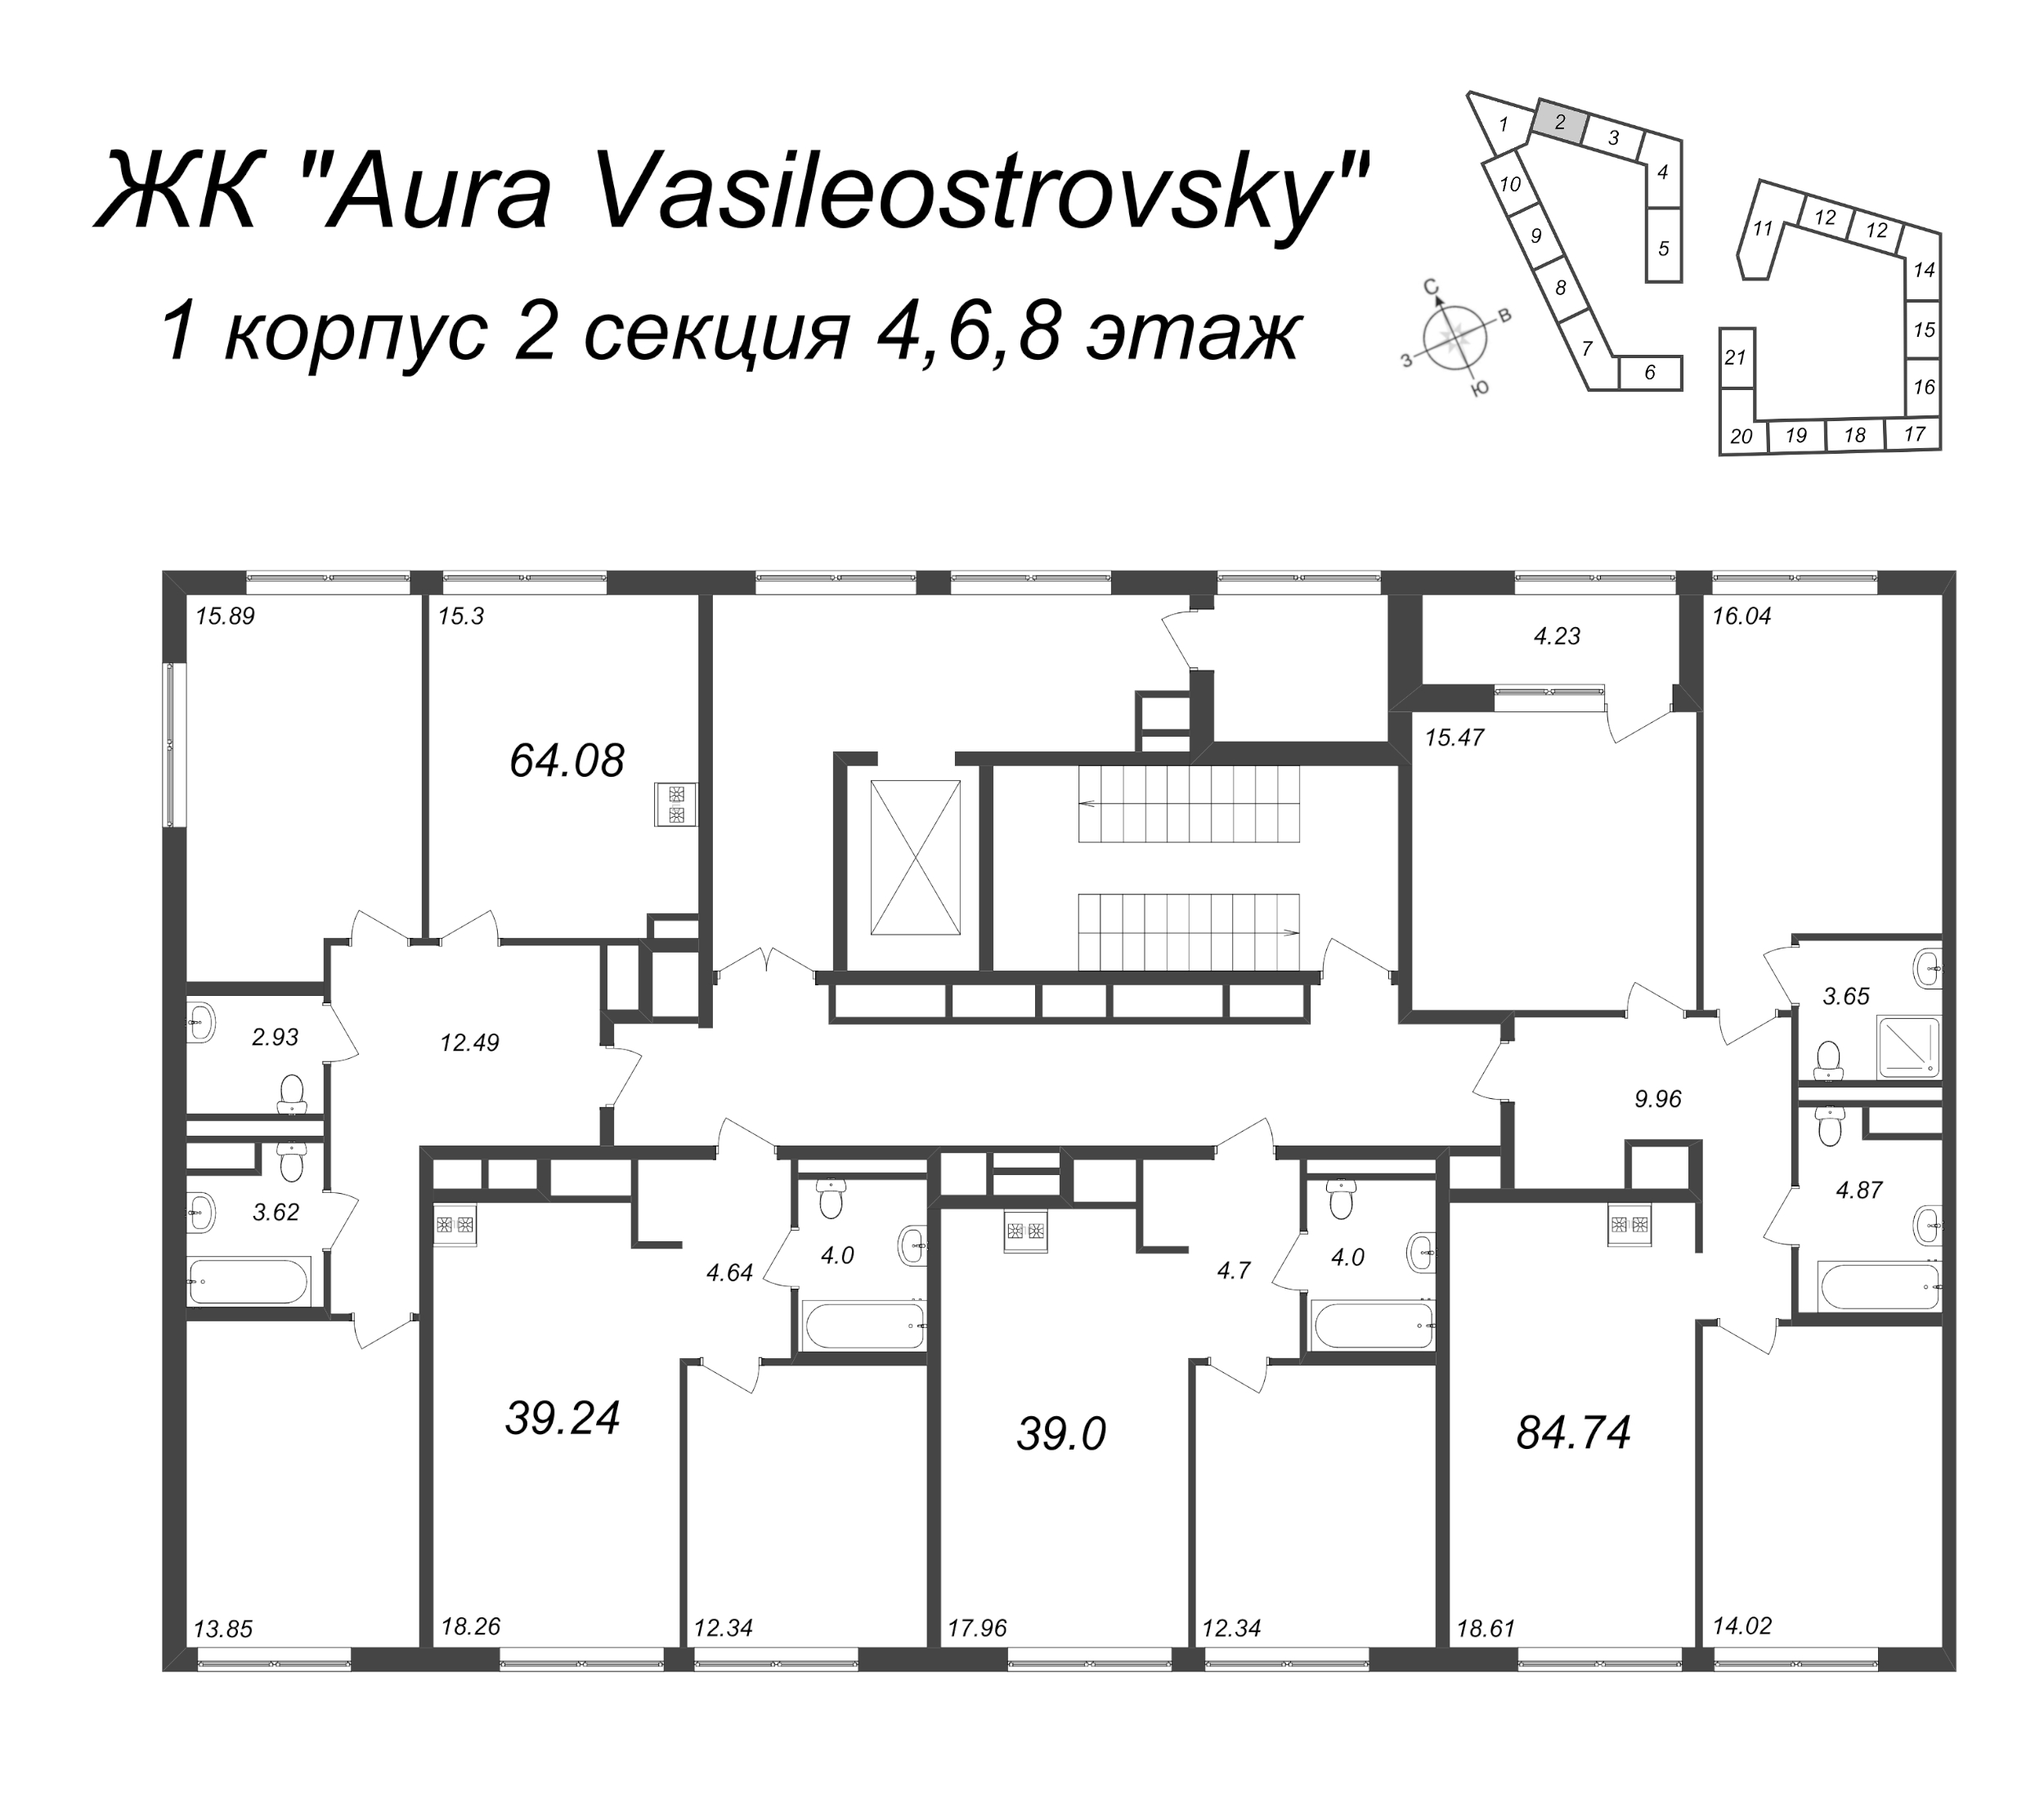 2-комнатная (Евро) квартира, 39.24 м² - планировка этажа